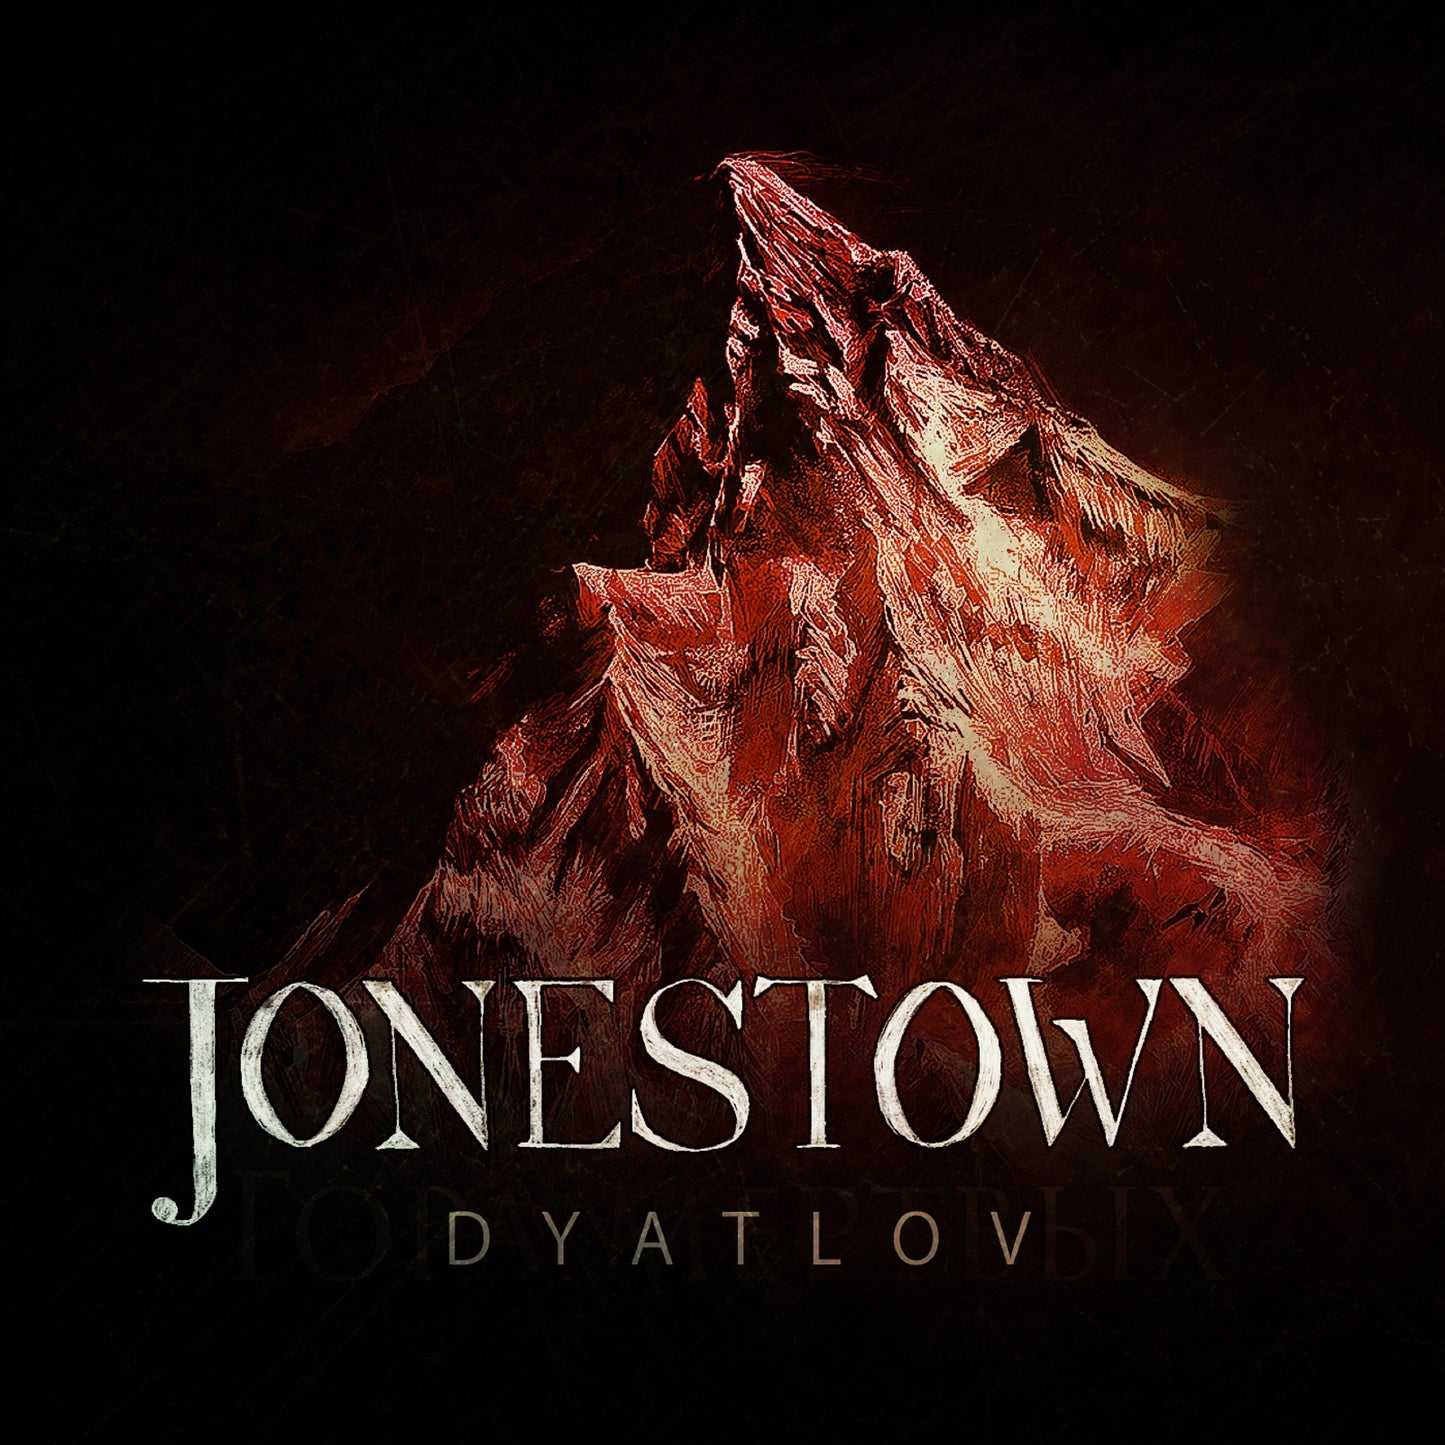 Jonestown "Dyatlov" CD-Bundle "Dyatlov"